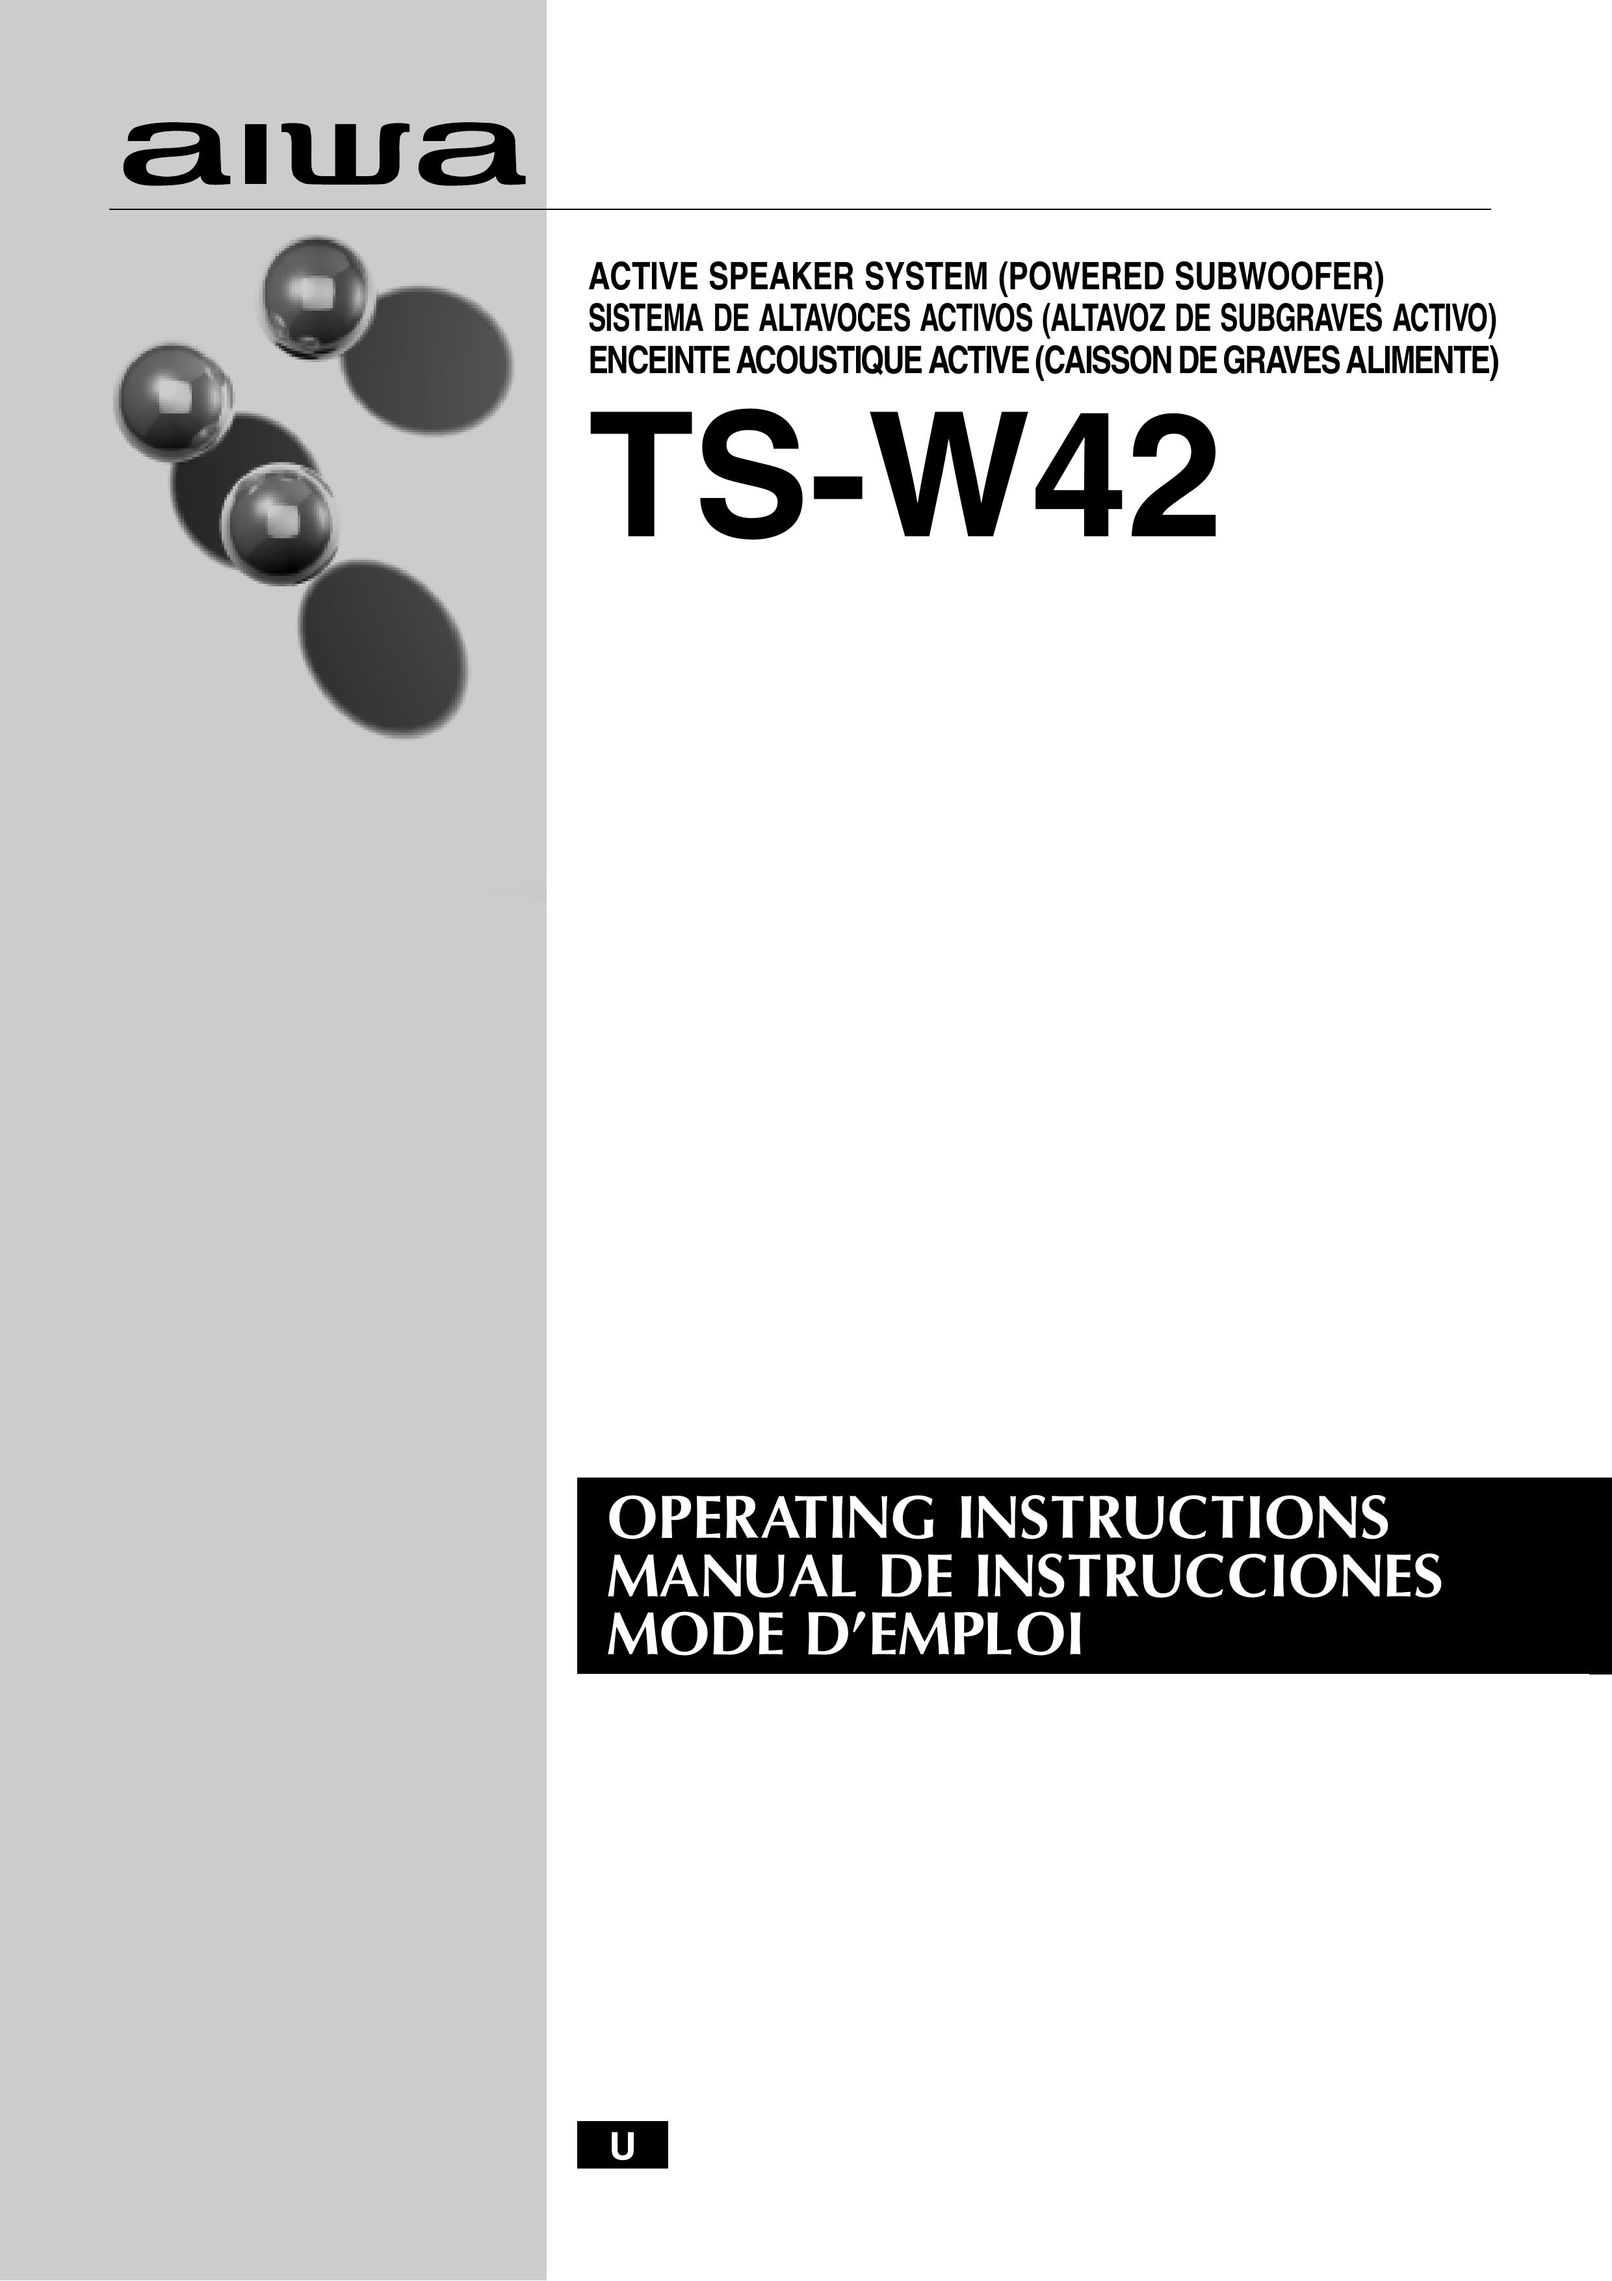 Aiwa TS-W42 U Speaker User Manual